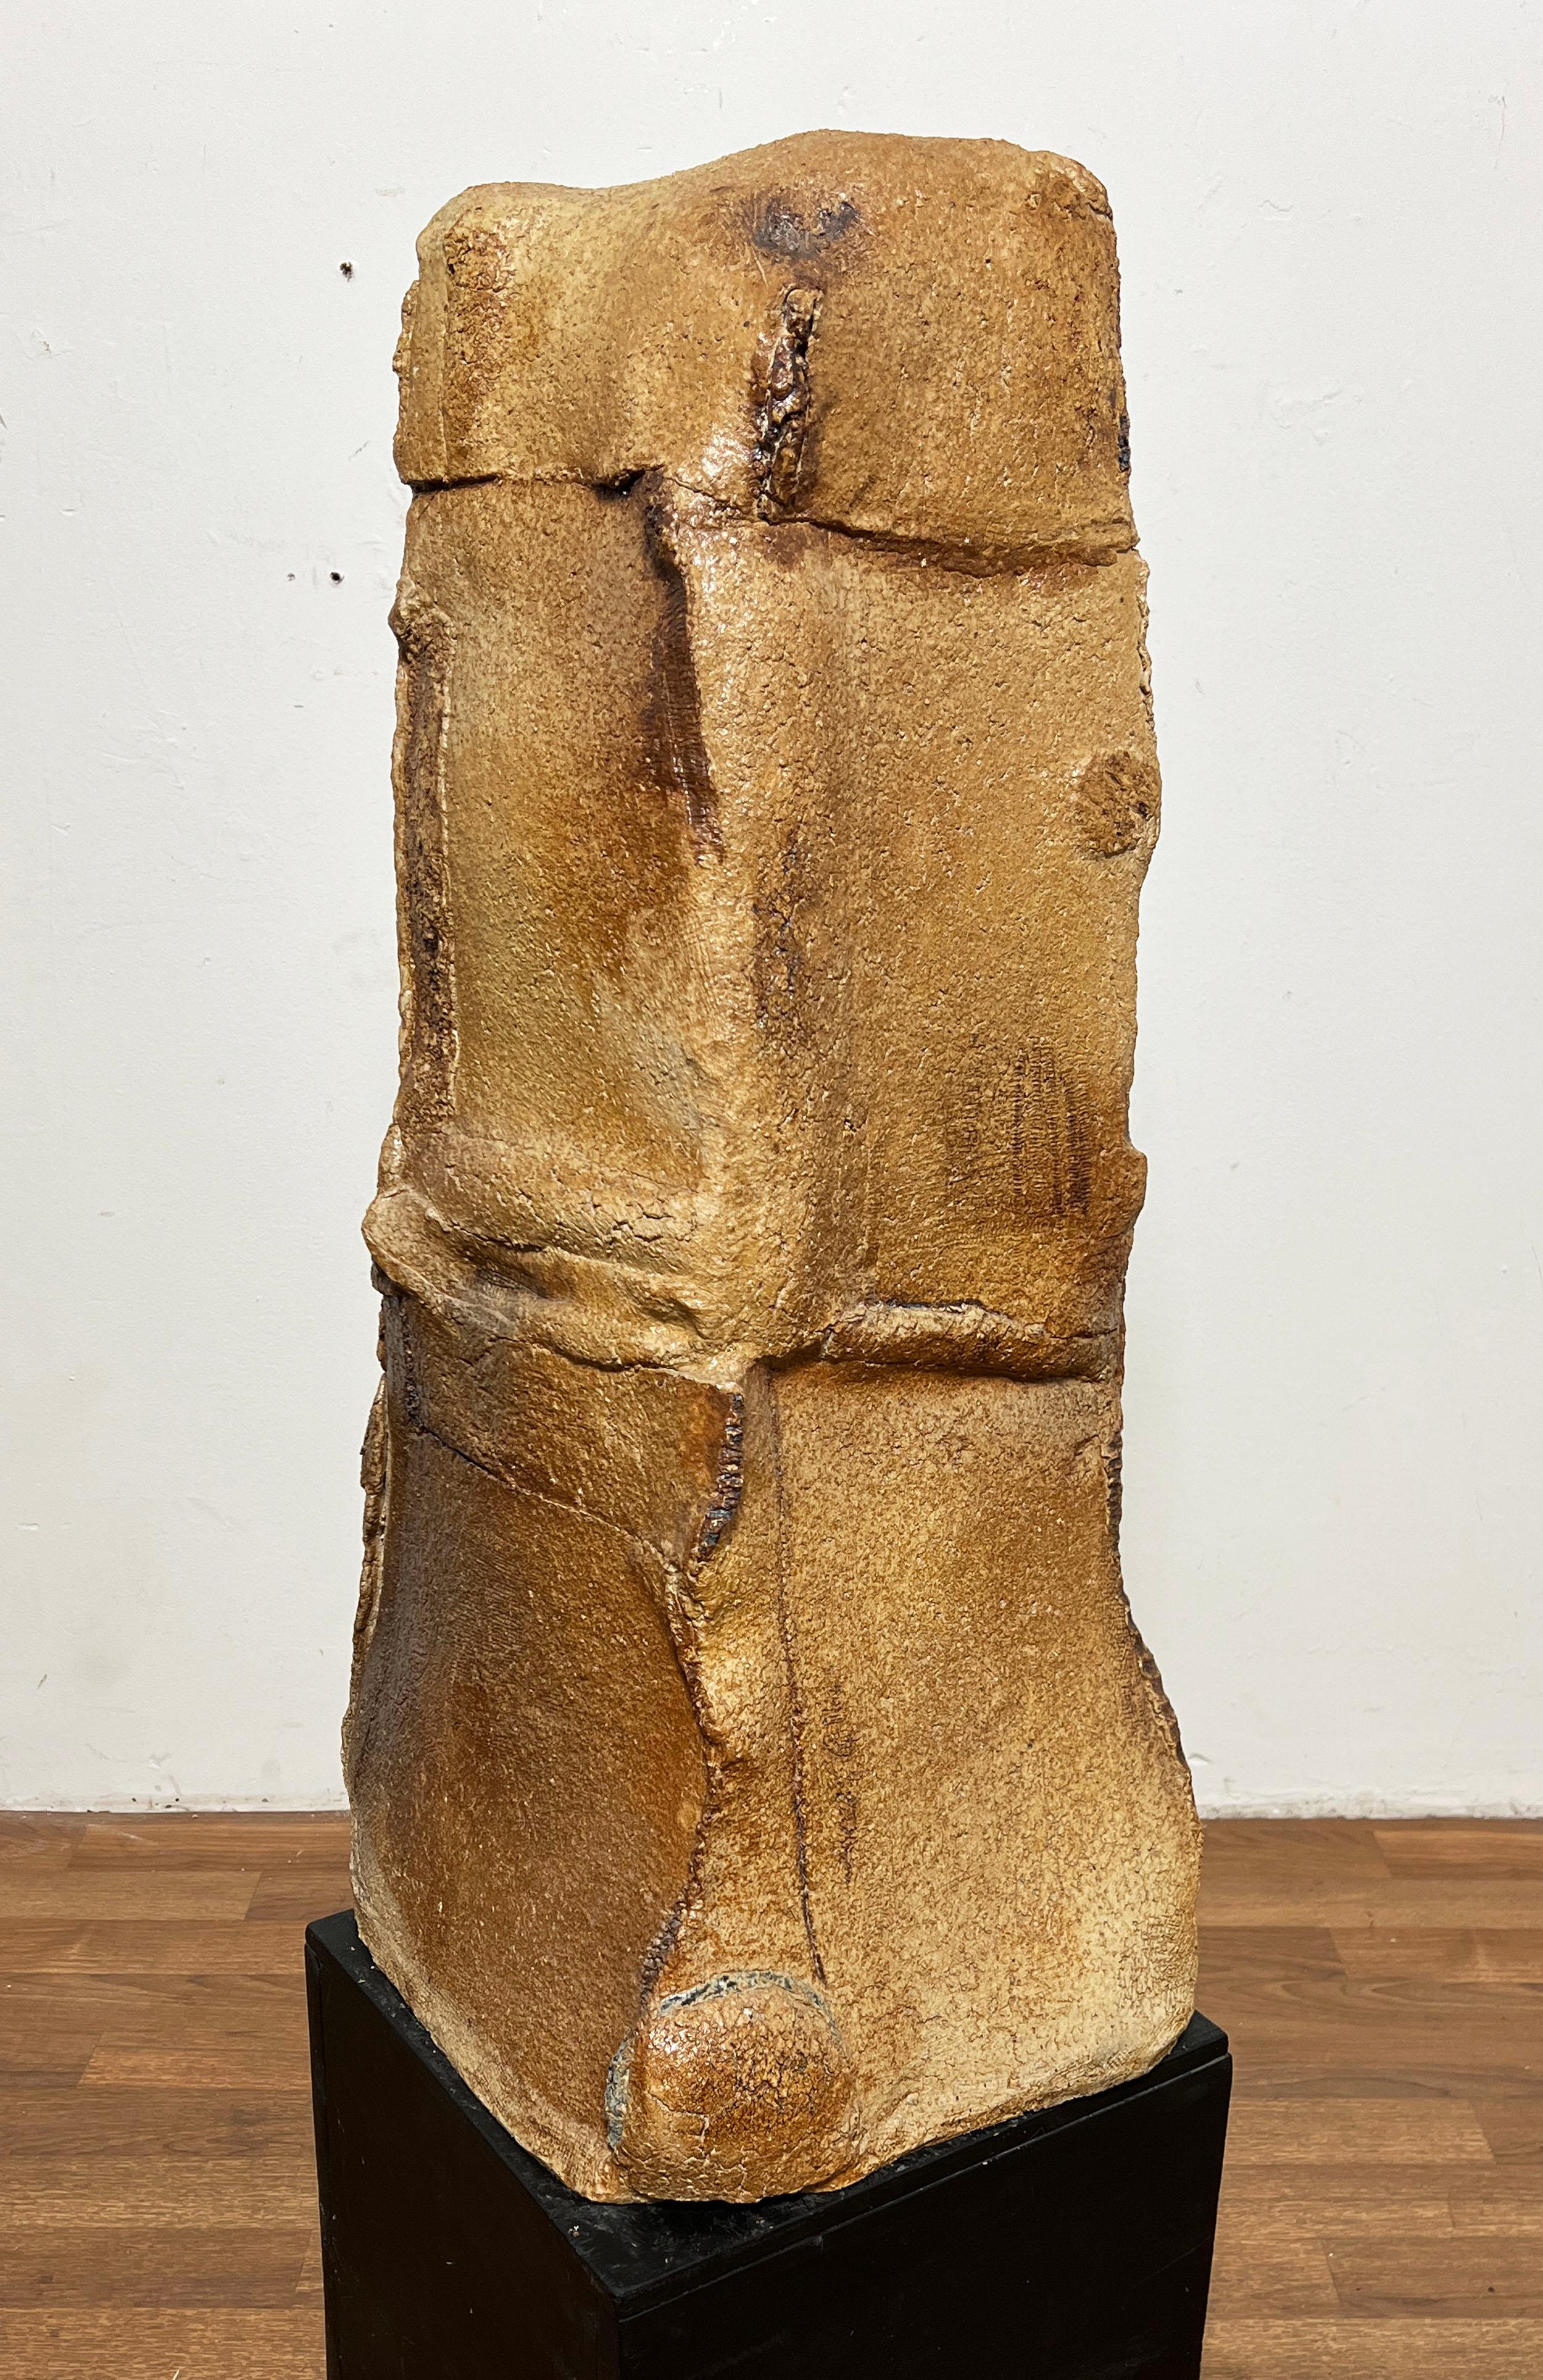 Stacked stoneware floor sculpture in salt glaze on wooden pedestal in the manner of Peter Voulkos, circa 1970s.